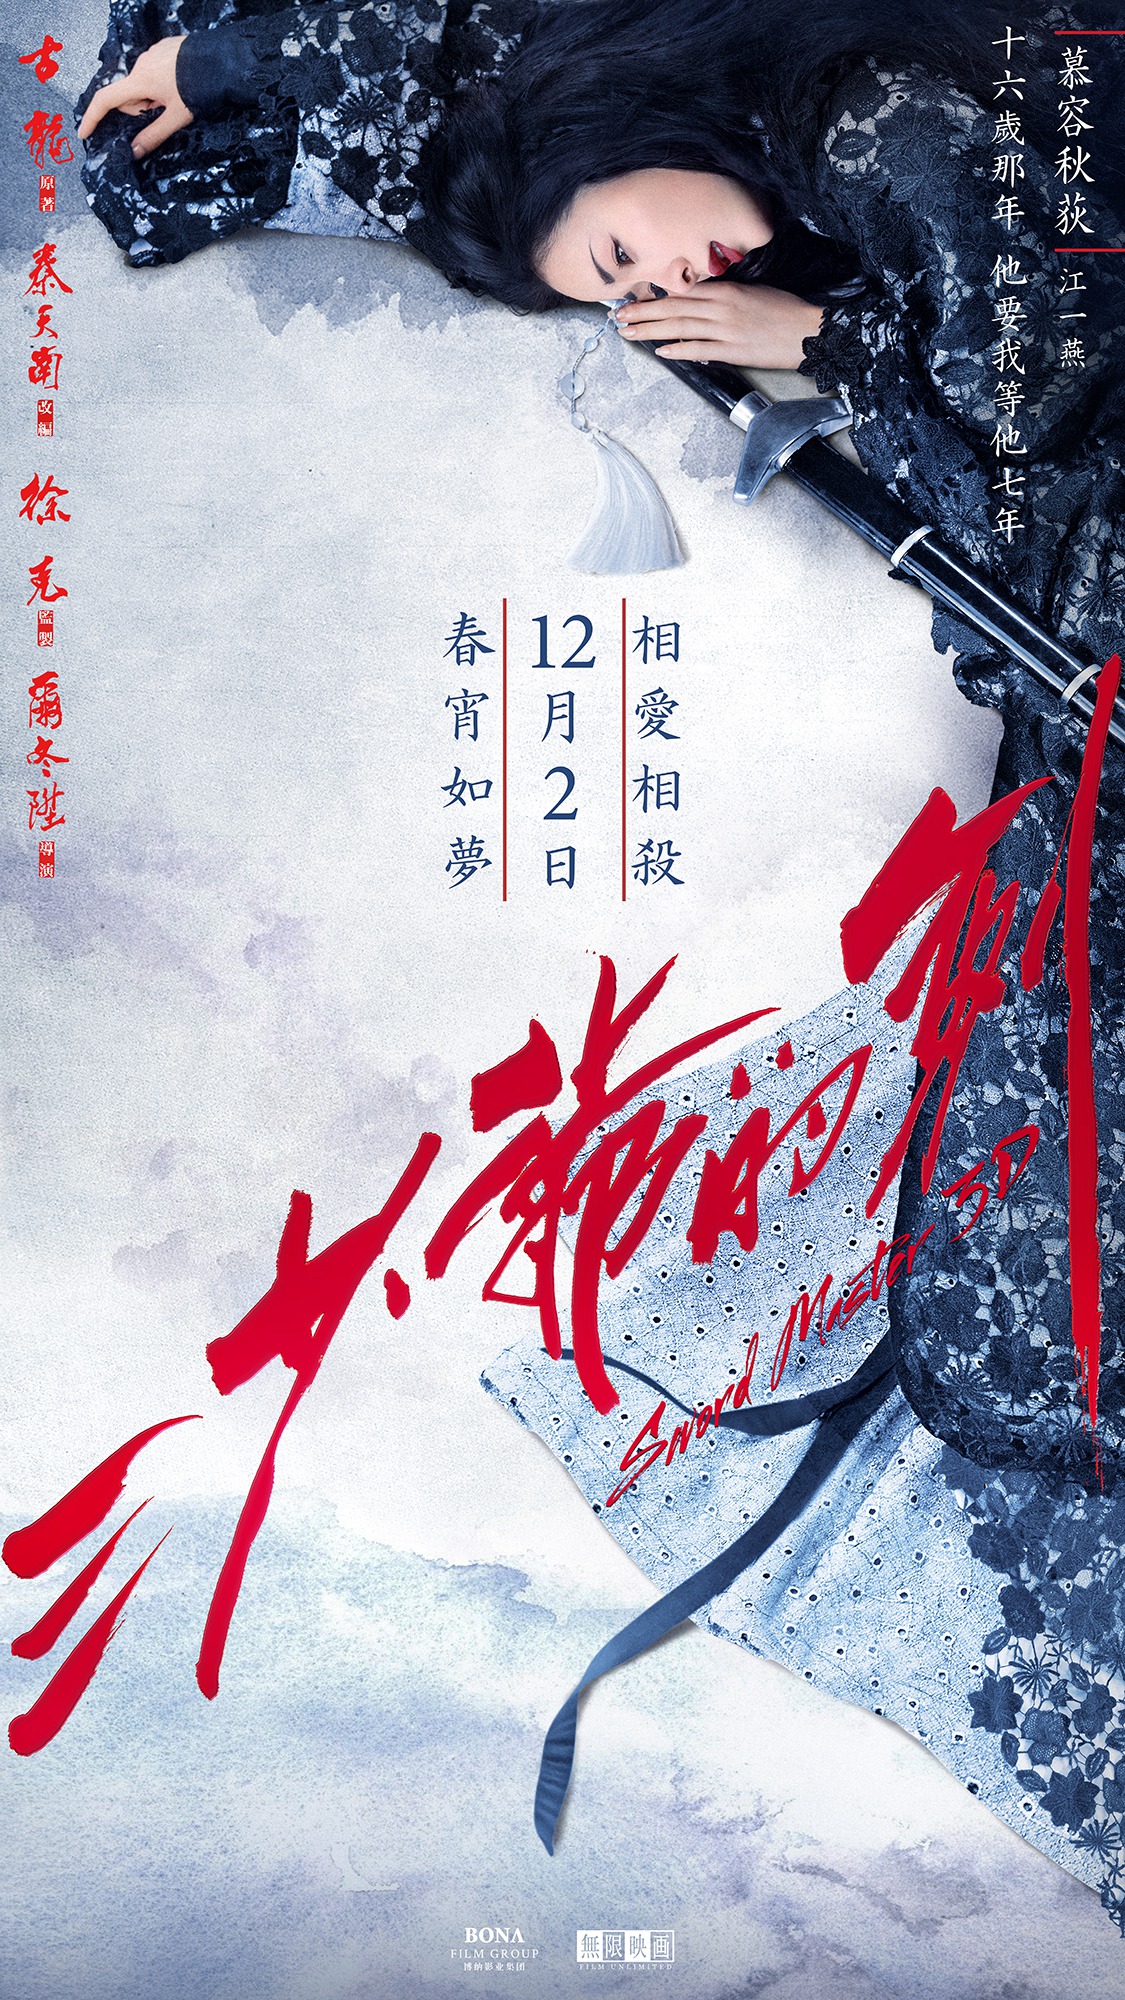 Mega Sized Movie Poster Image for San shao ye de jian (#6 of 11)